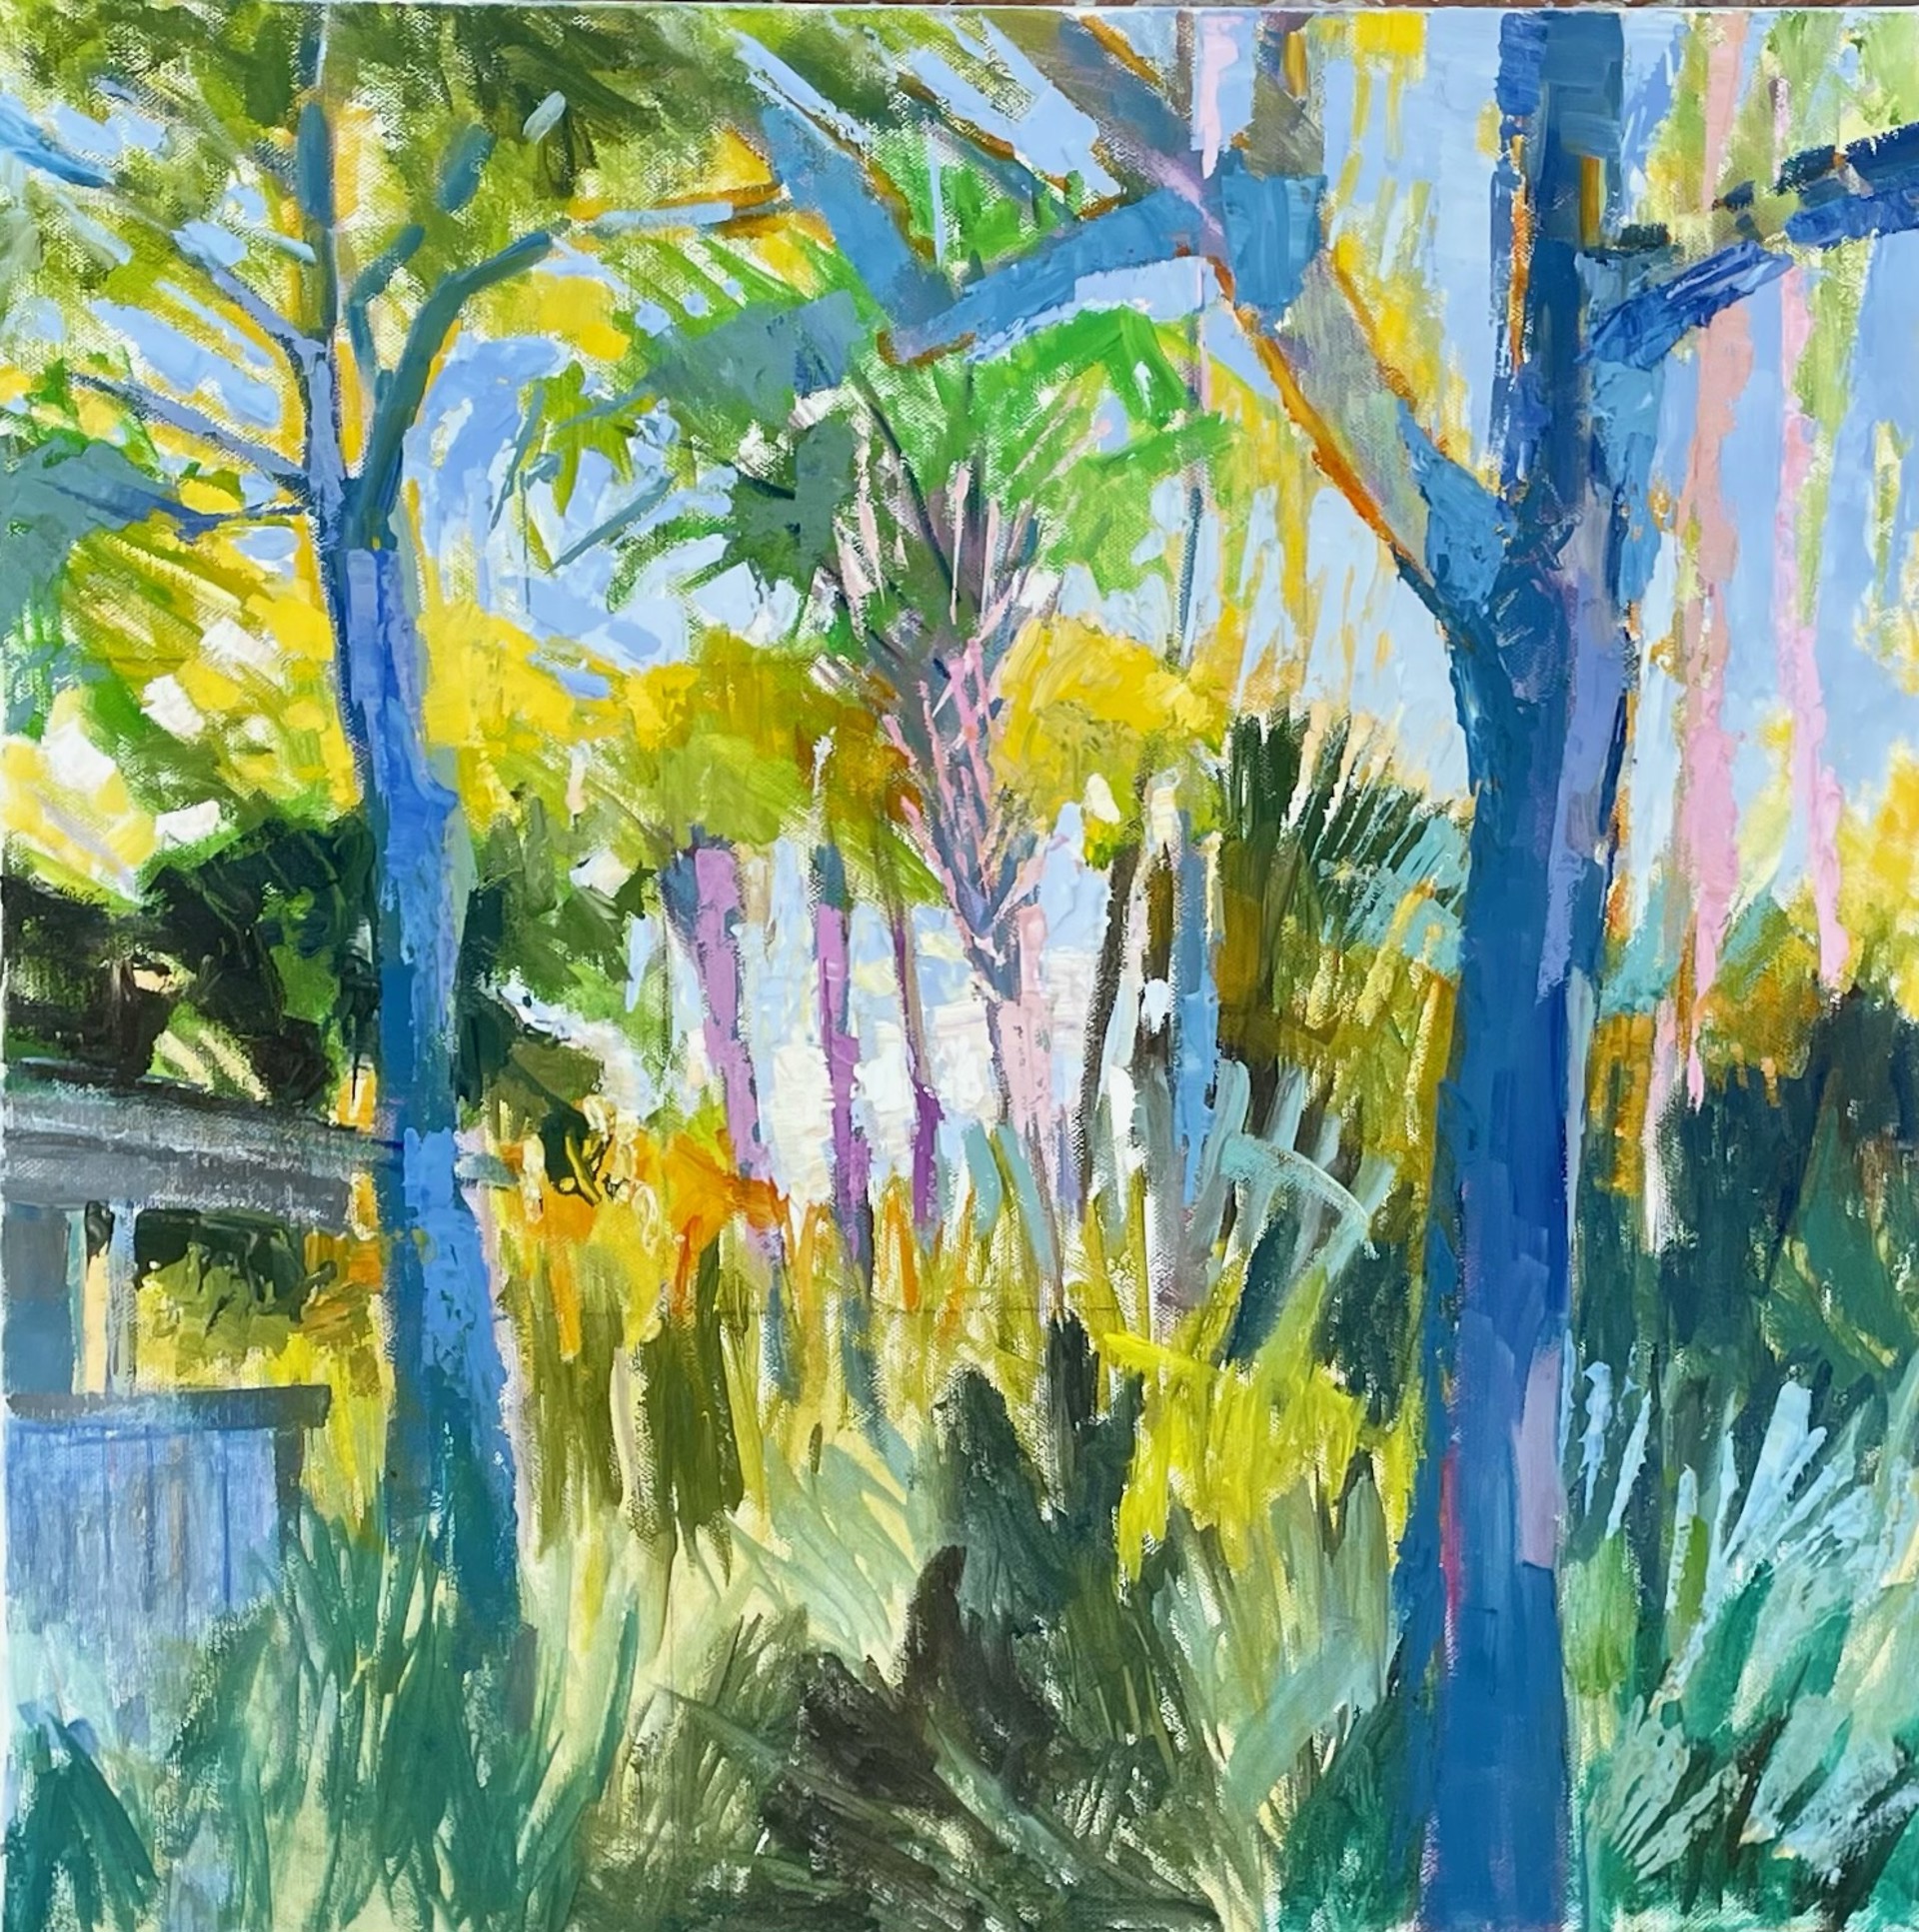 Sawgrass and Palms by Maggie Shepherd